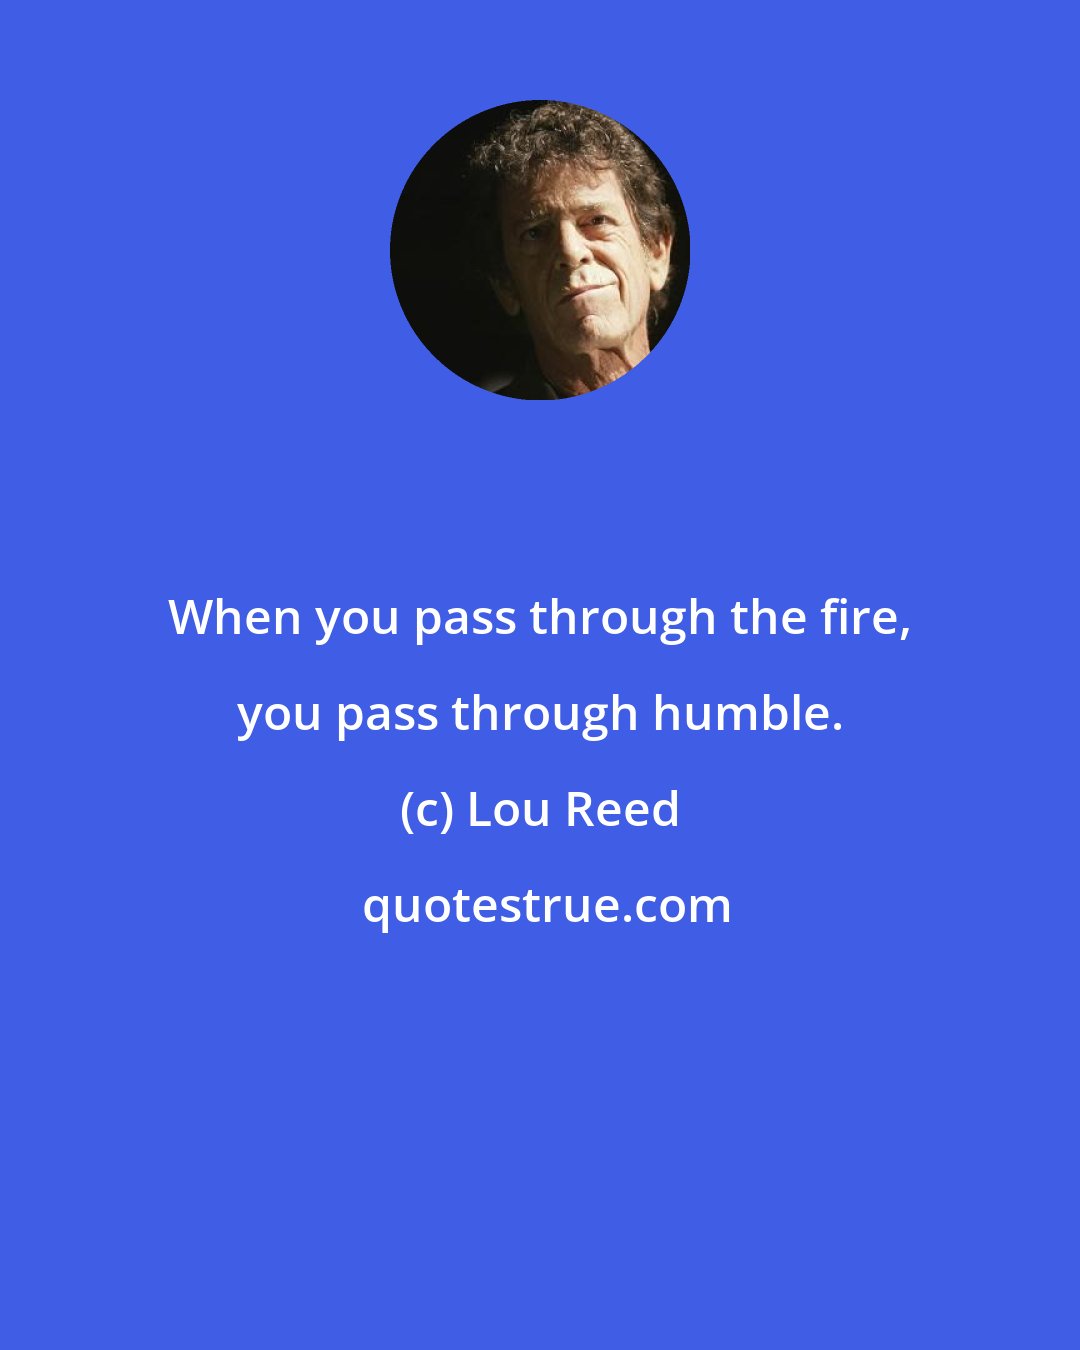 Lou Reed: When you pass through the fire, you pass through humble.